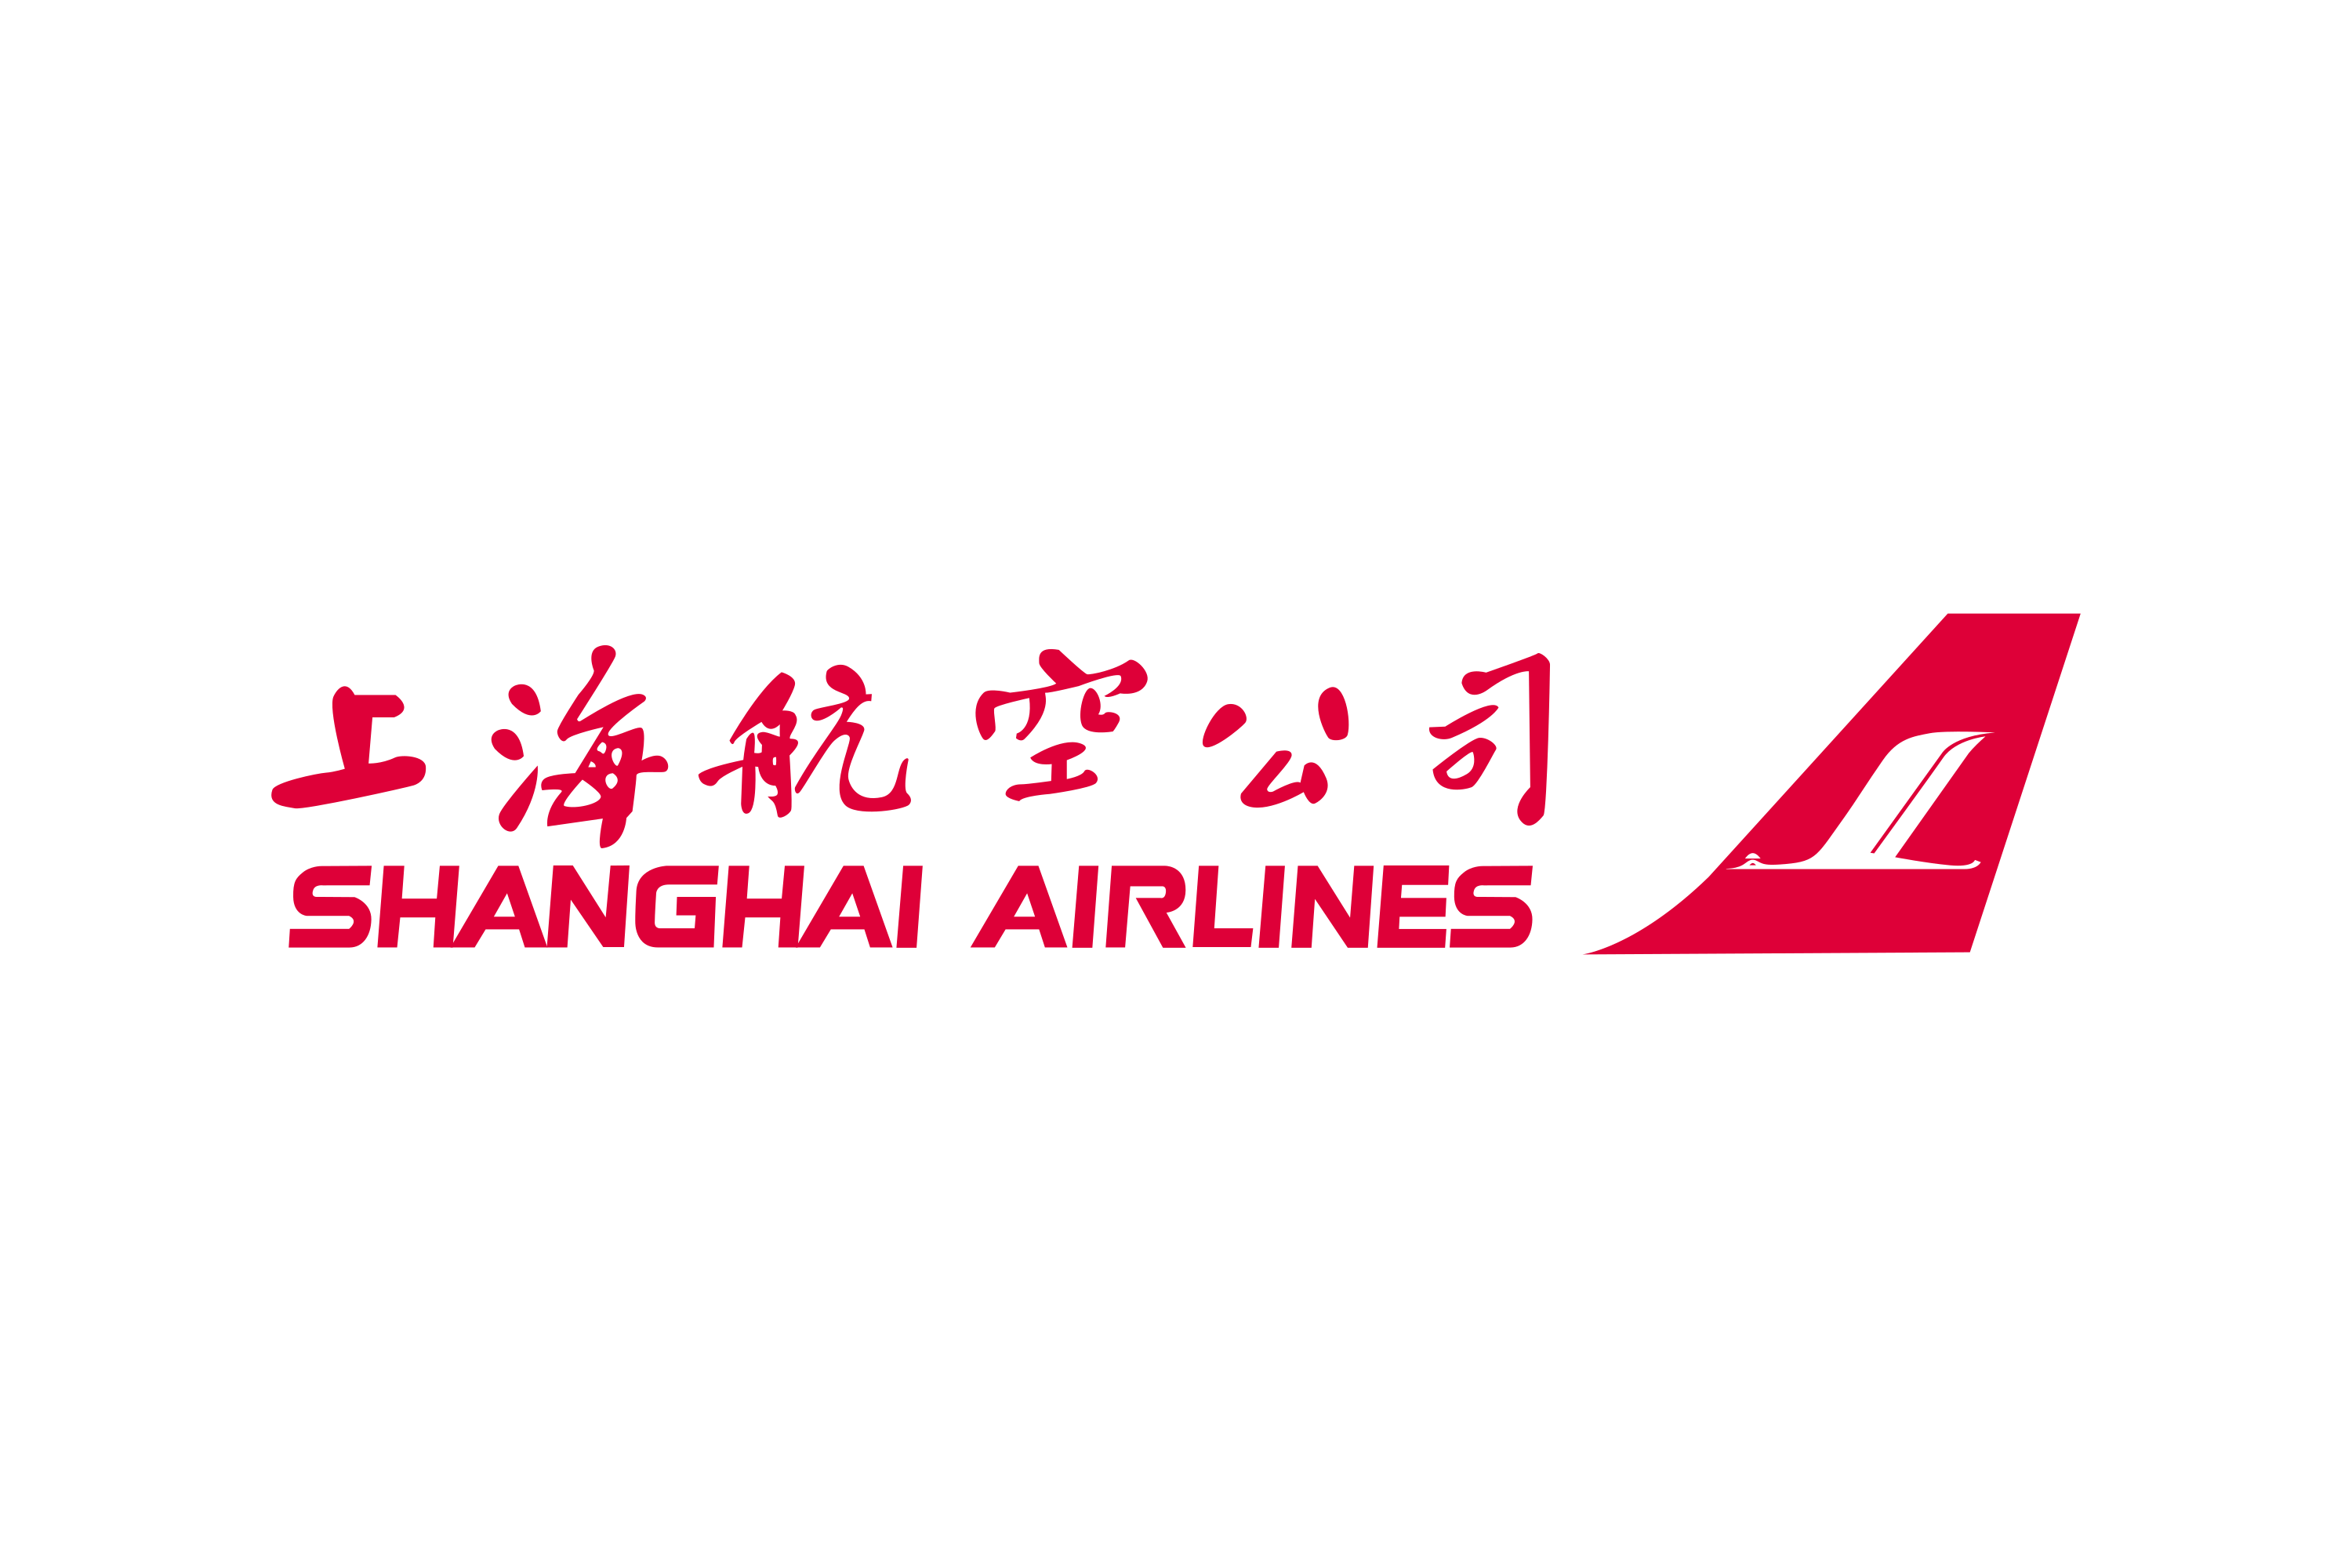 Download Shanghai Airlines Logo in SVG Vector or PNG File Format - Logo